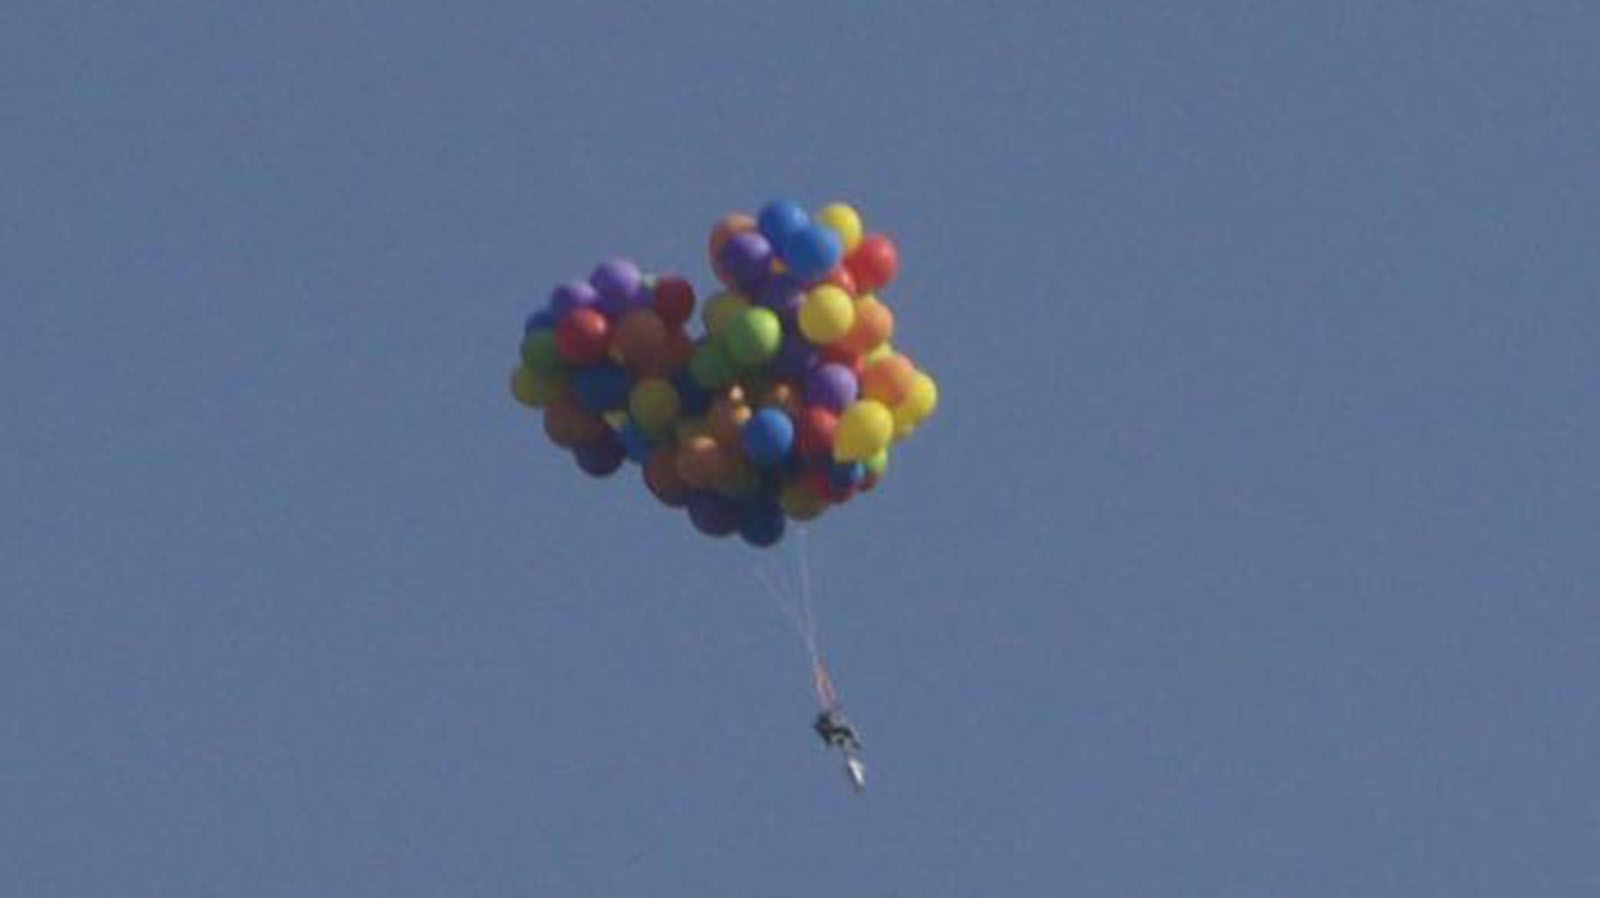 Nu al Voorkeur douche Balloon man' soars in lawn chair, lands in jail | CNN